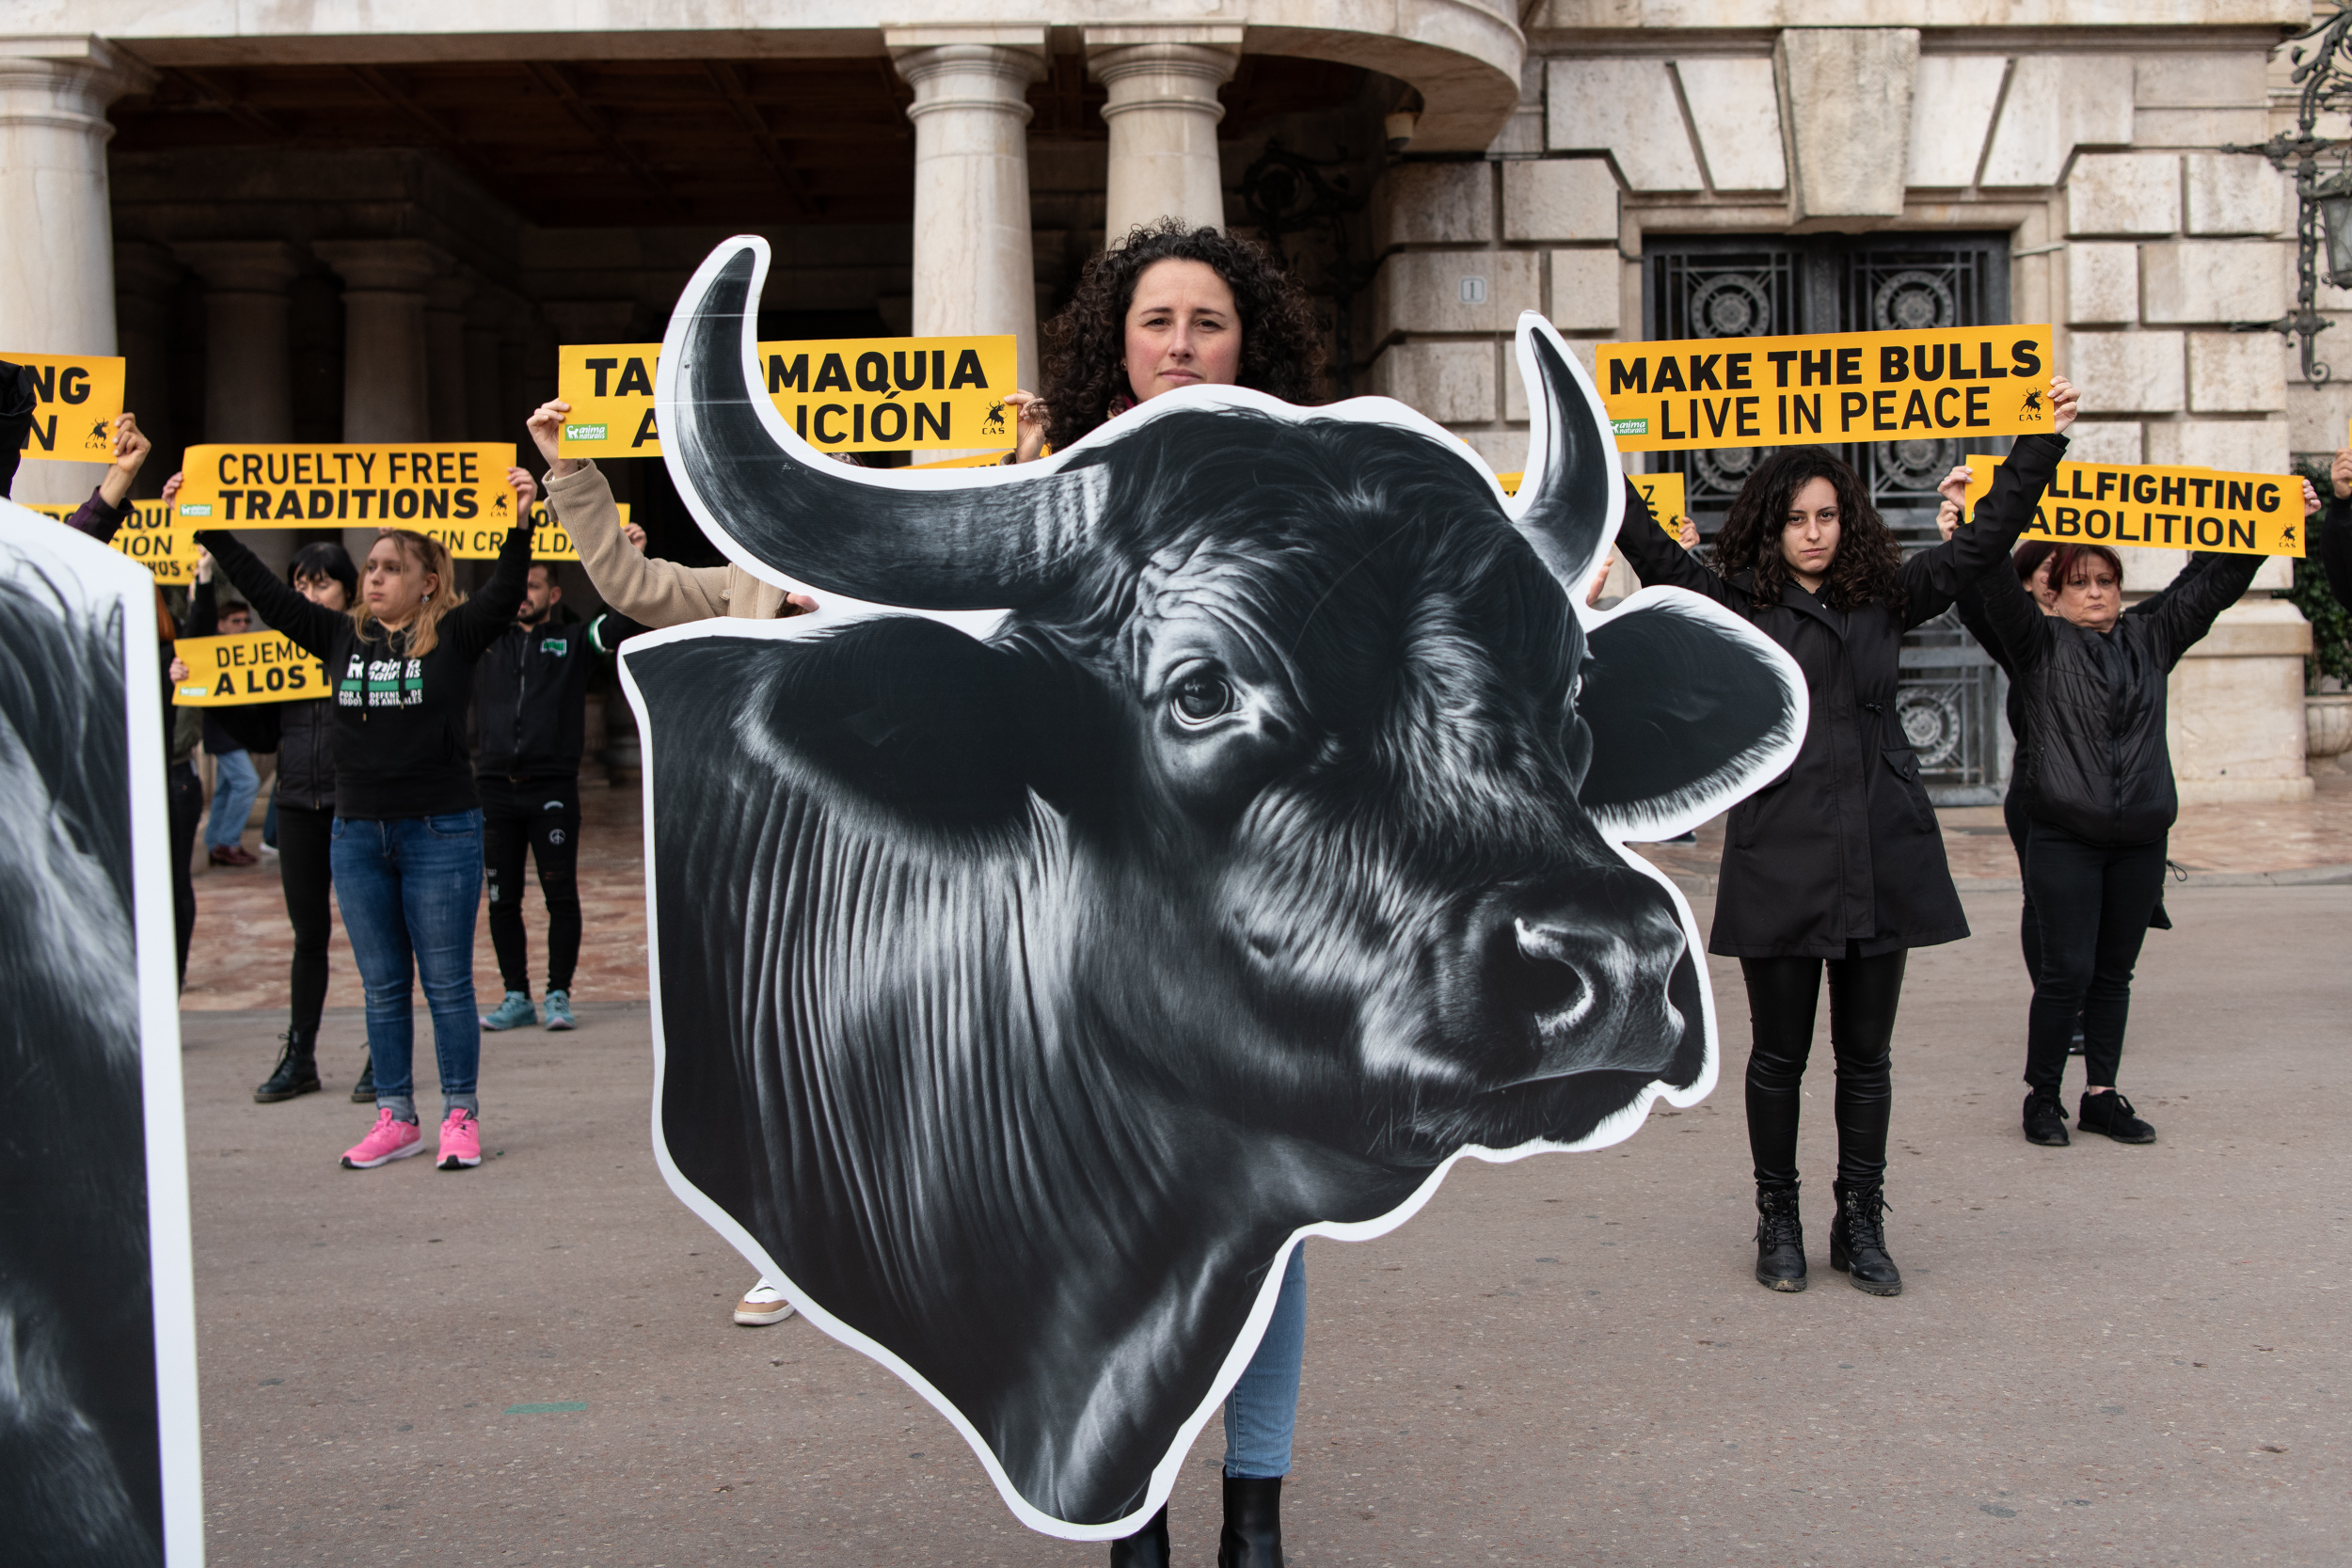 Maite van Gerwen protesting against bullfighting